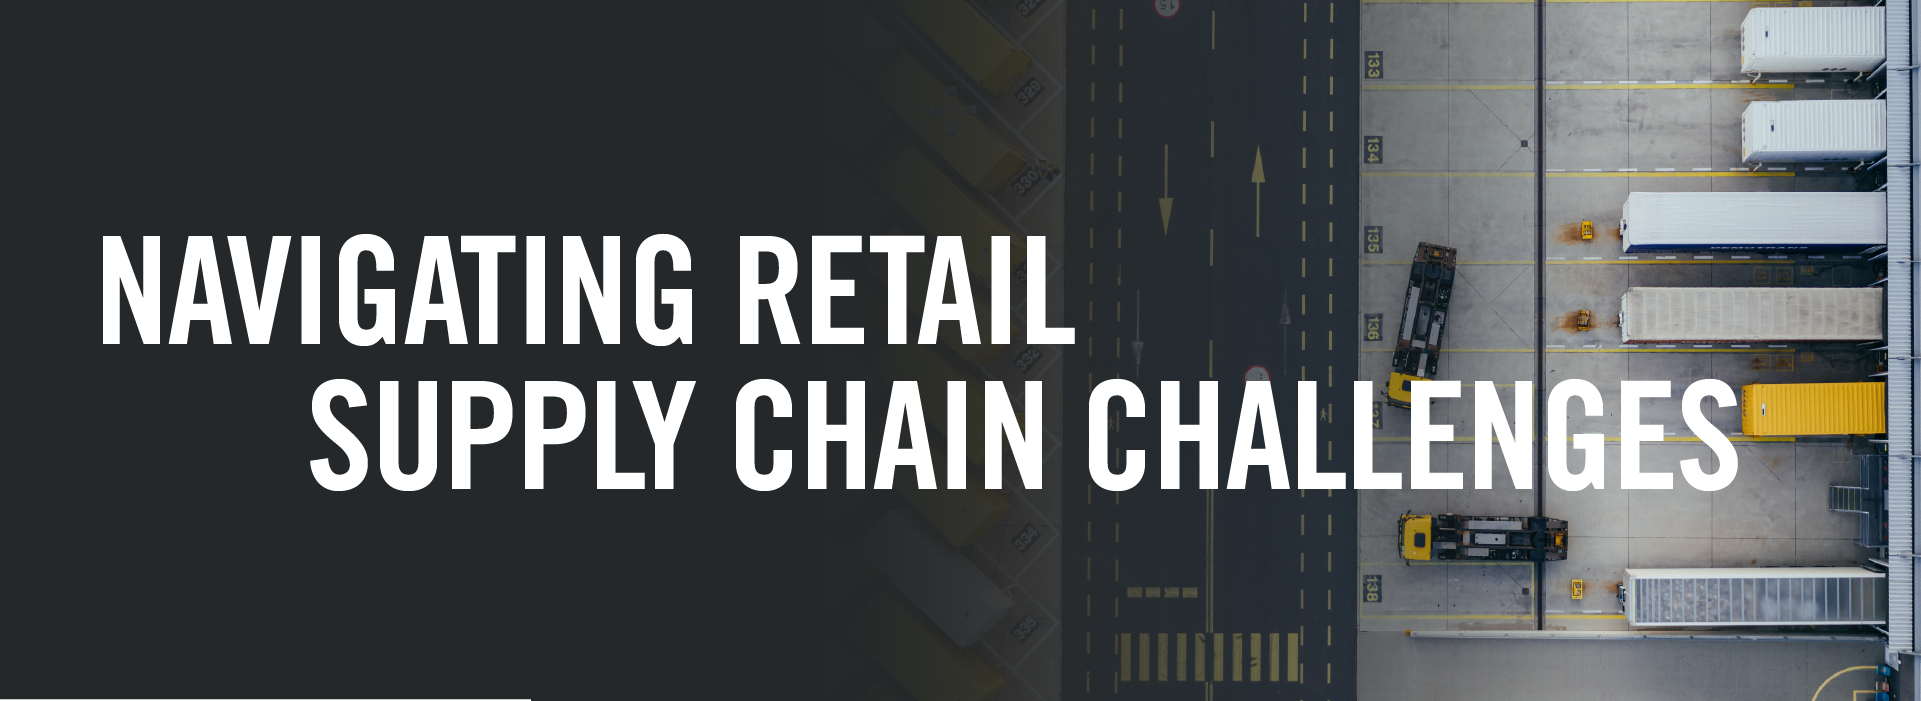 Retail Supply Chain